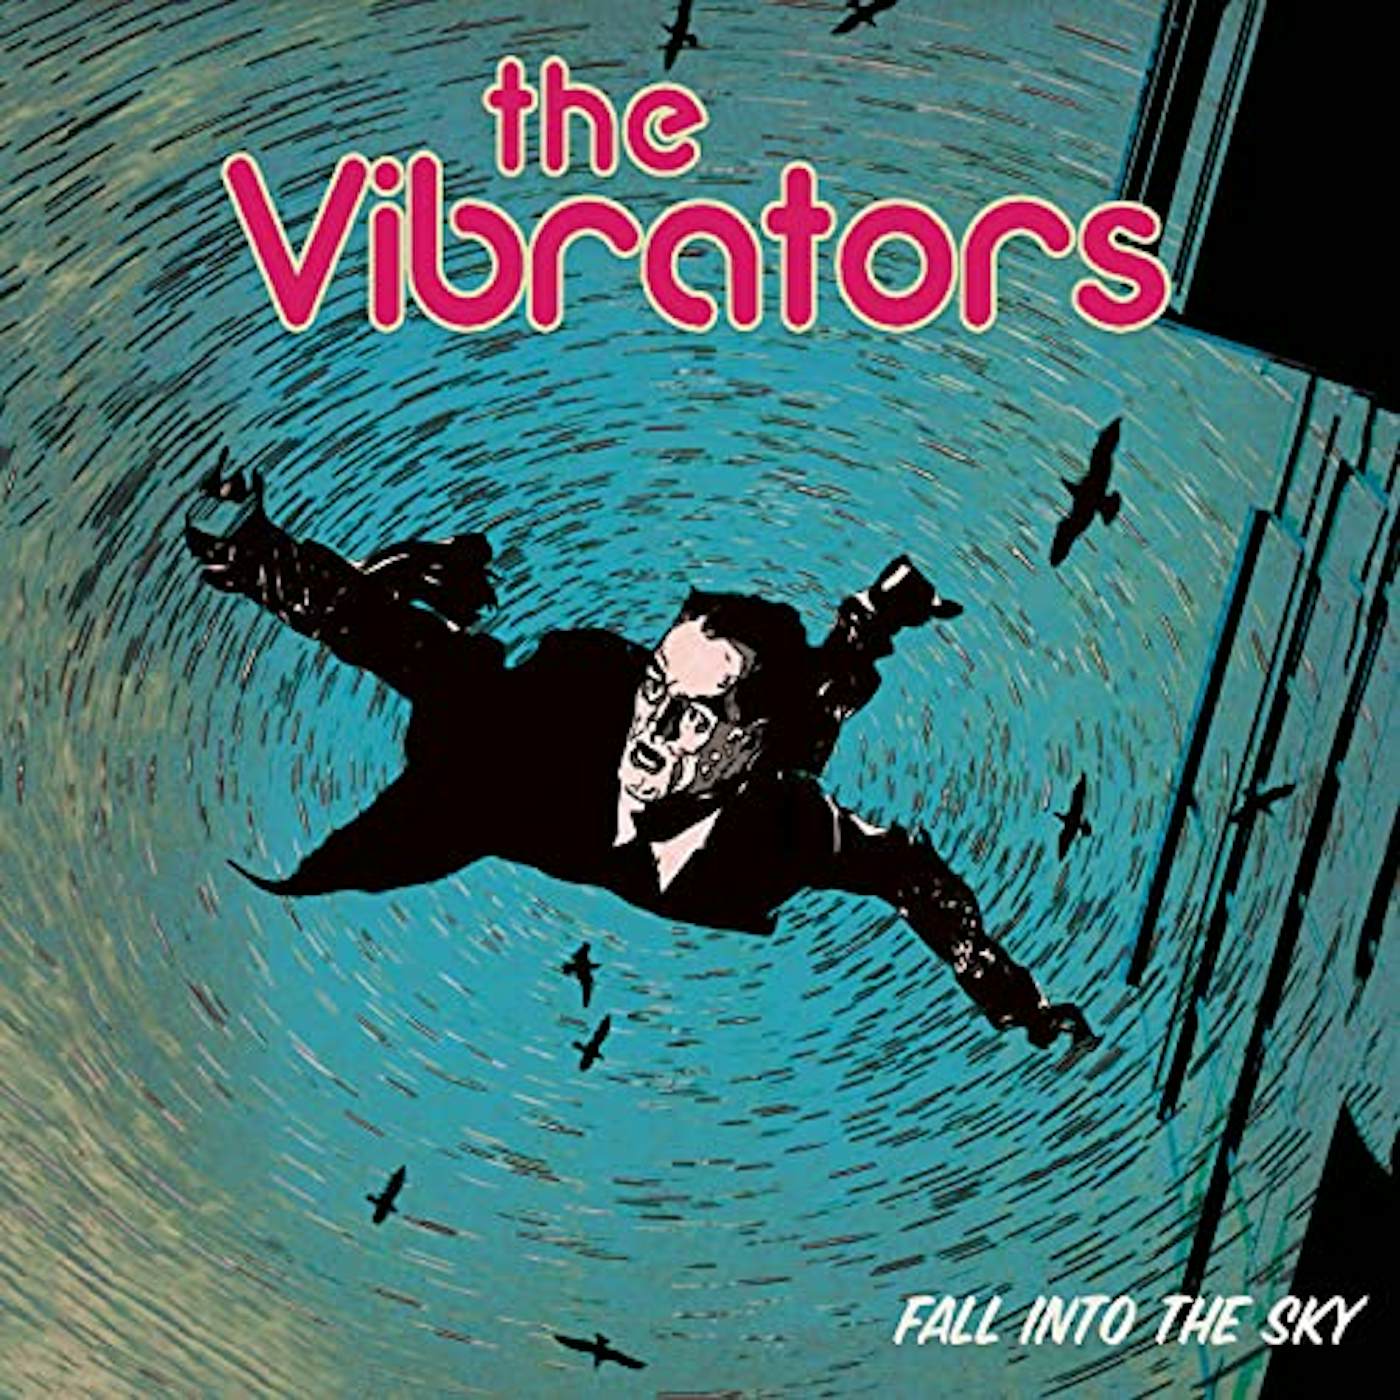 The Vibrators Fall Into The Sky (Pink vinyl) vinyl record